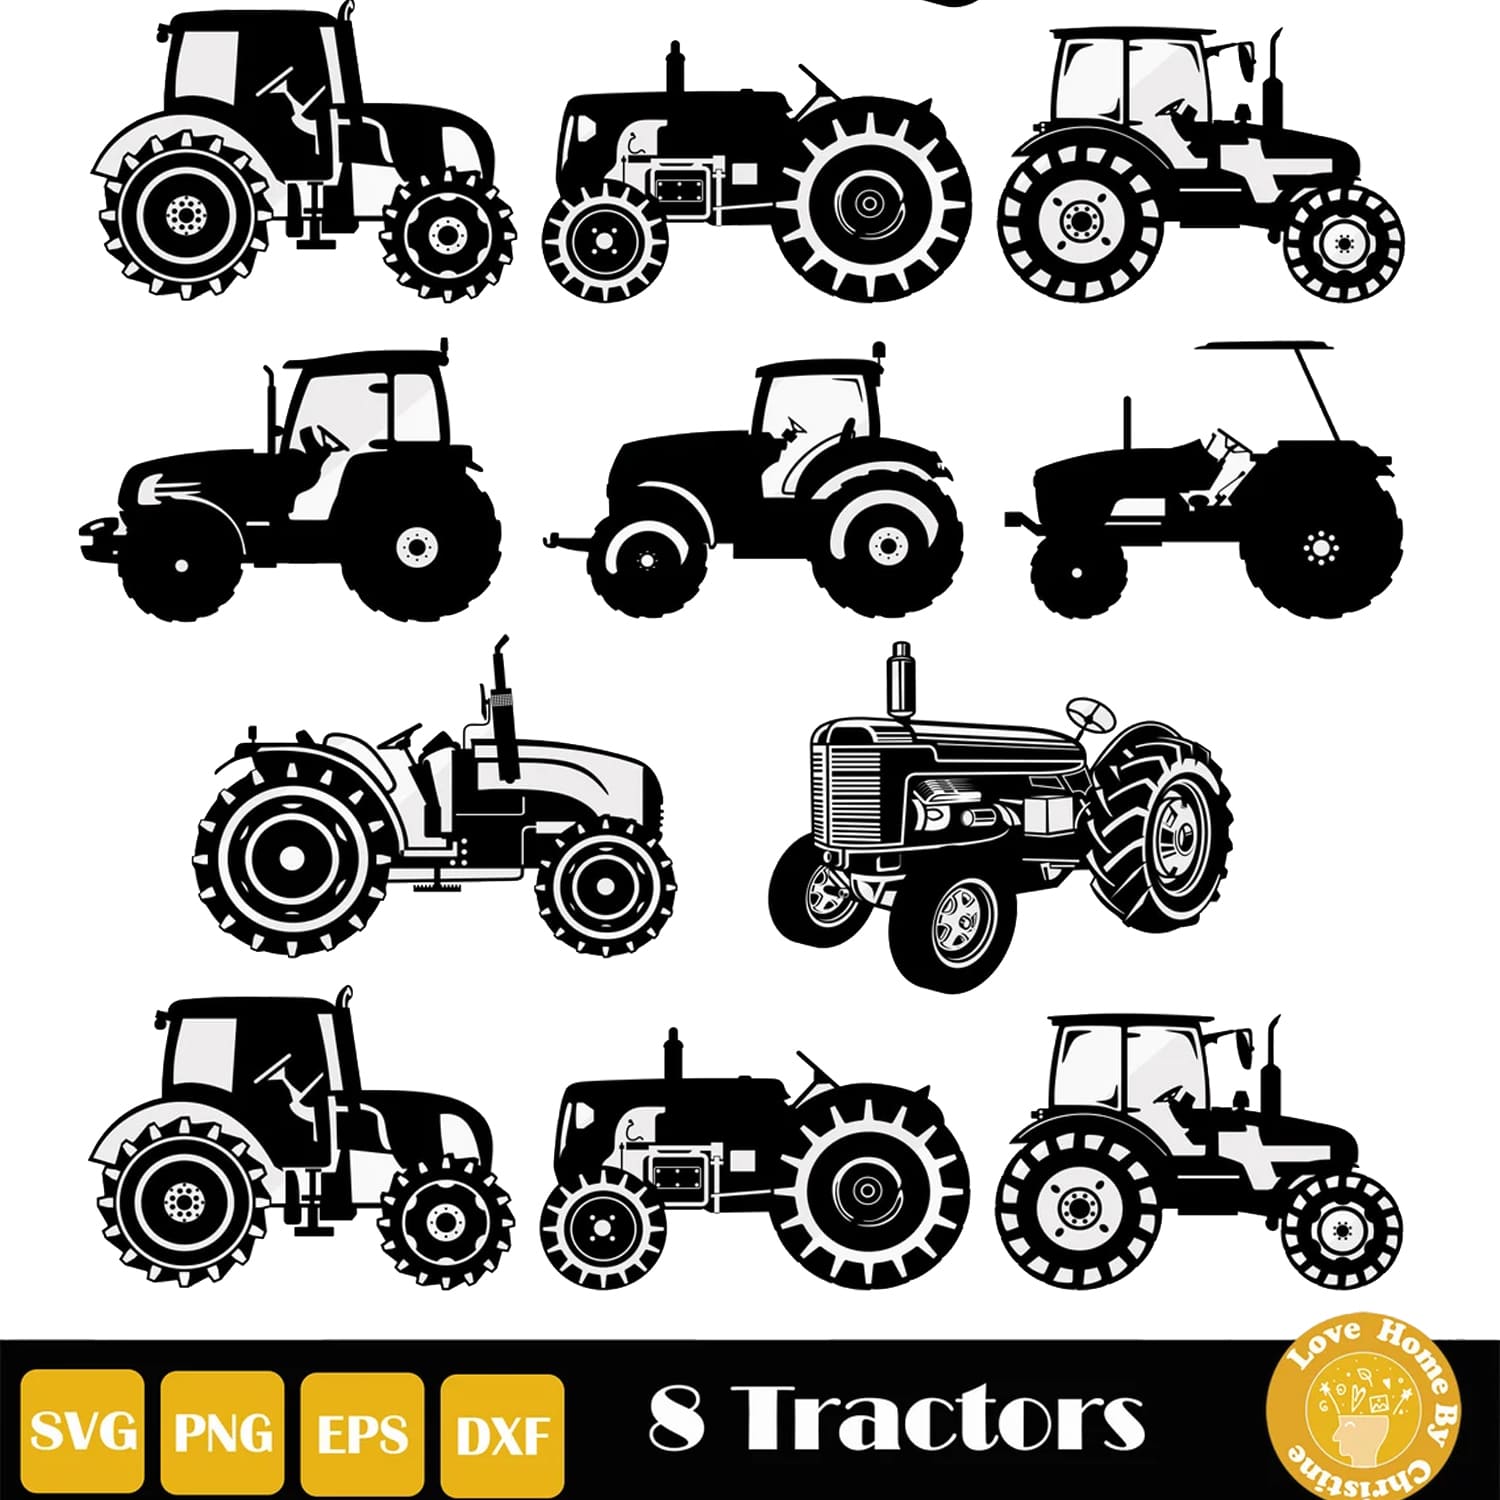 8 farm tractor svg illustrations.